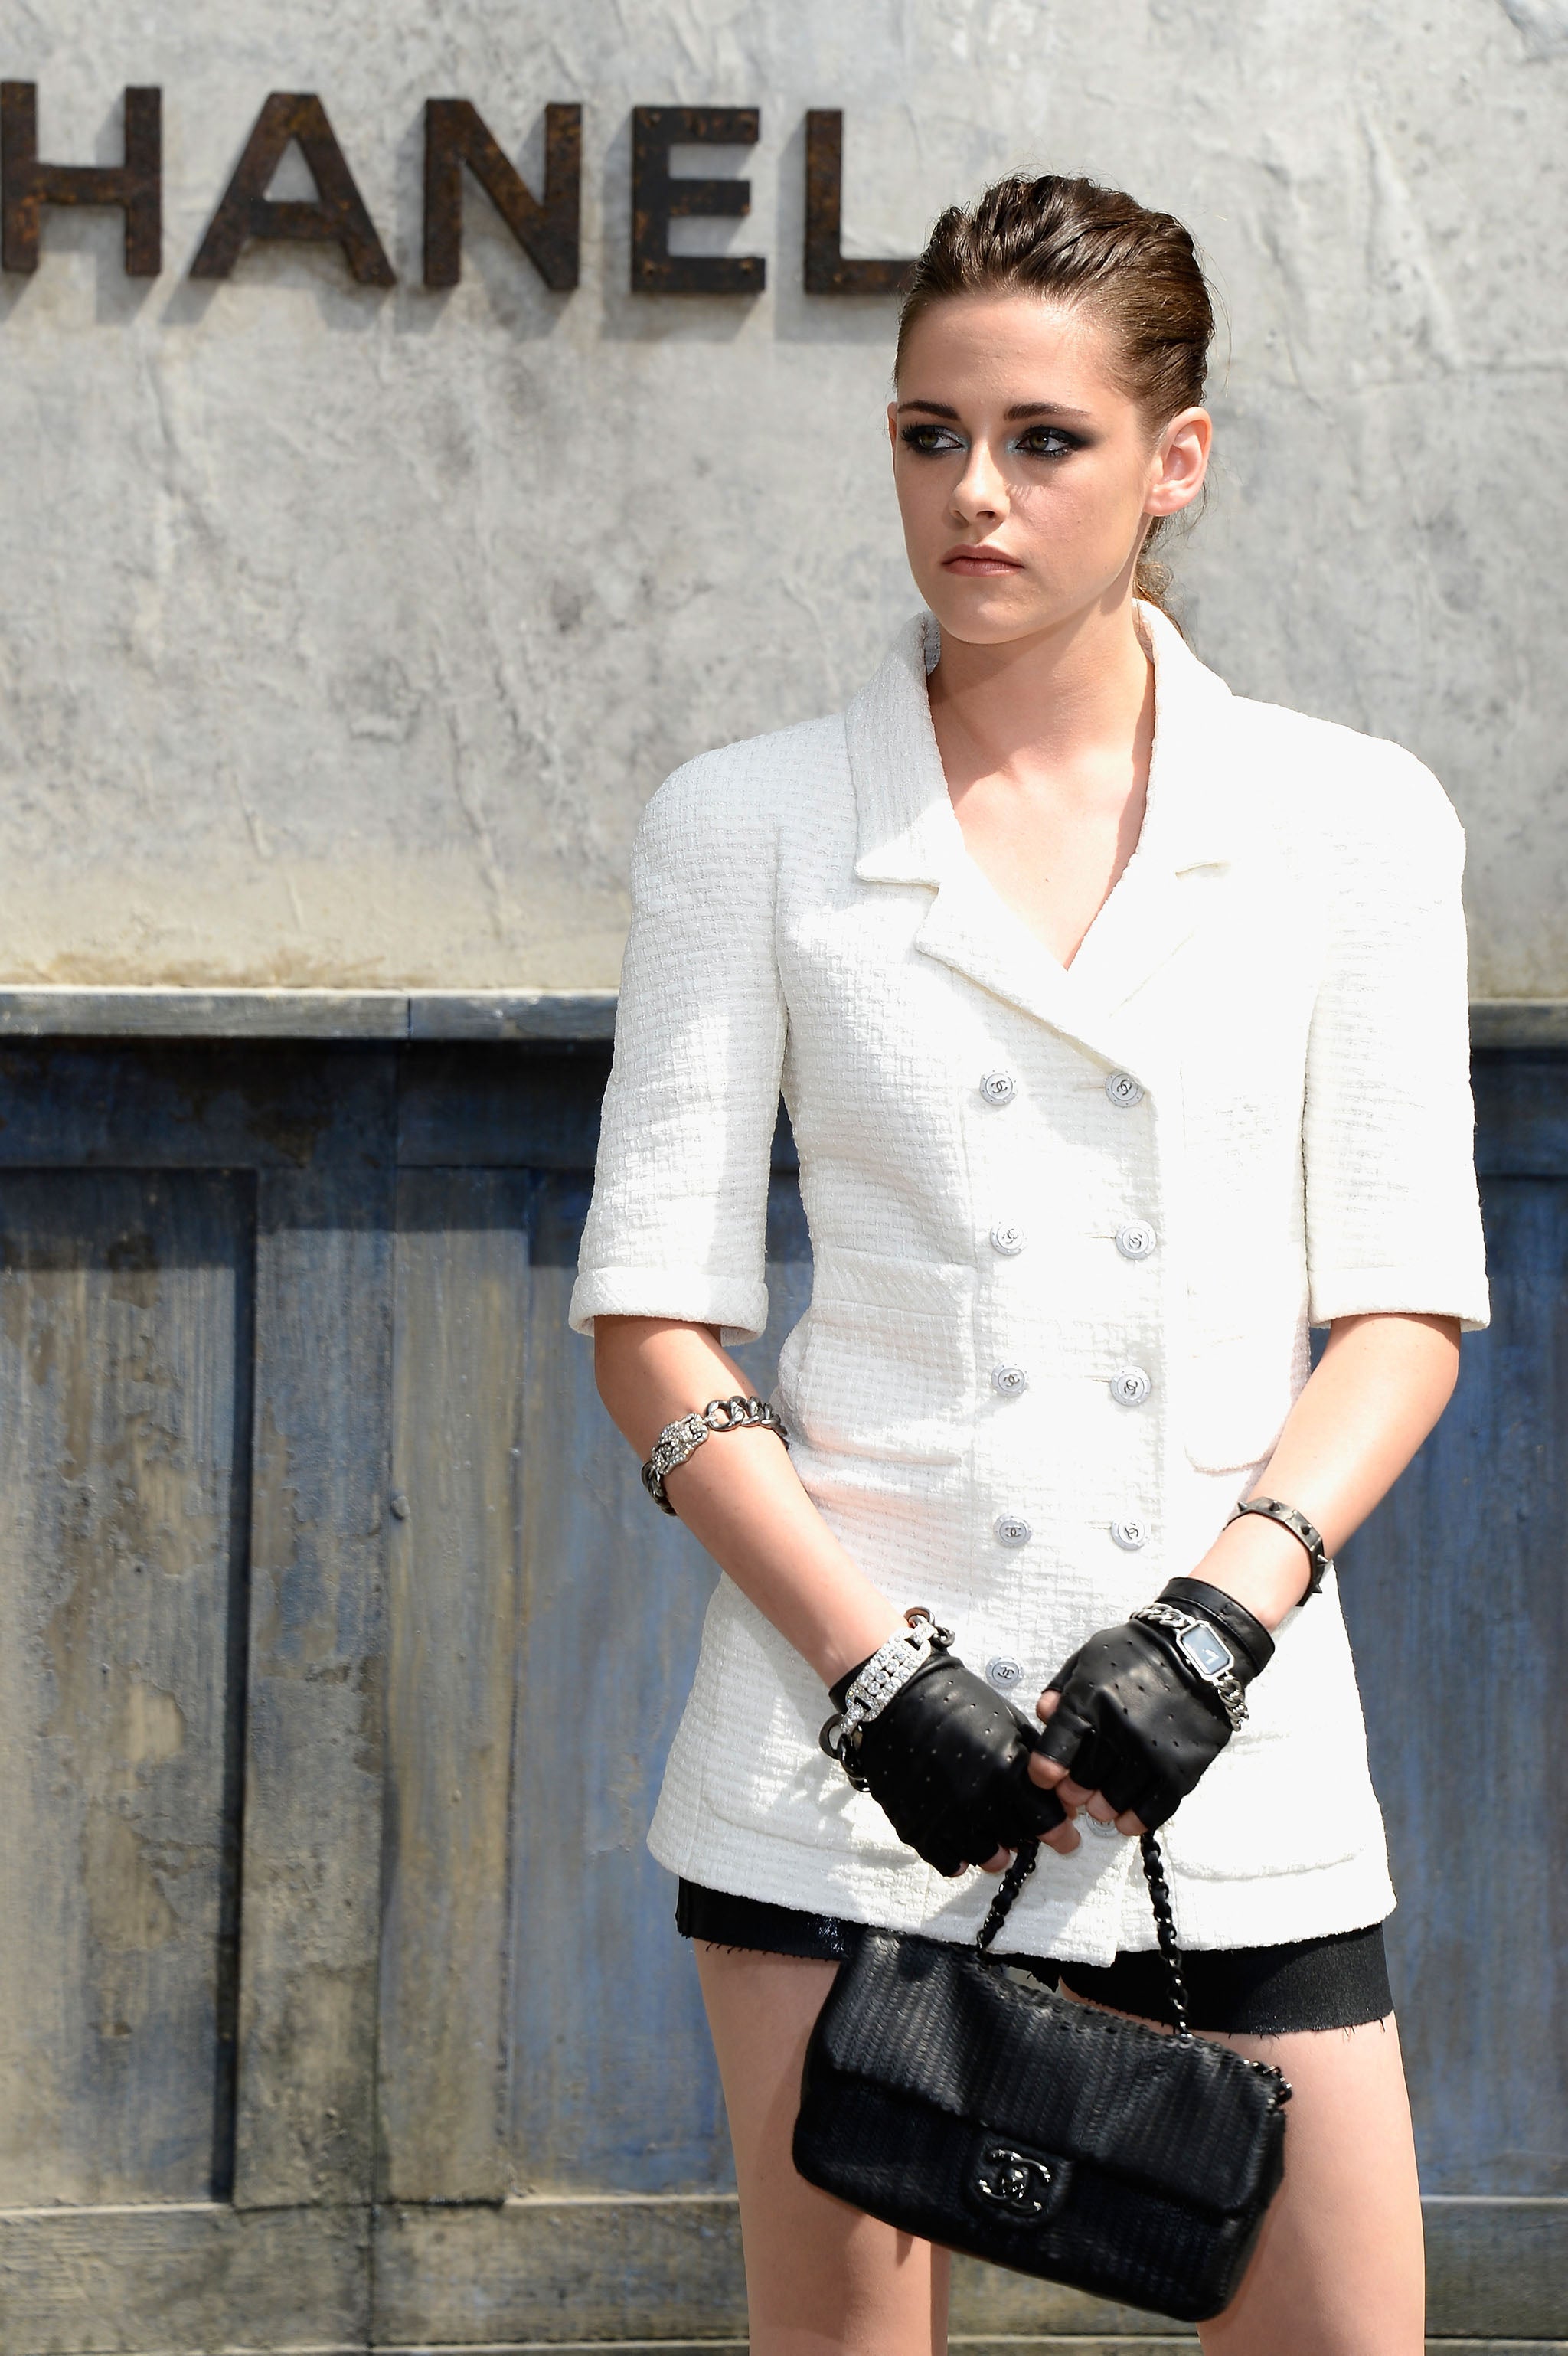 Kristen Stewart Continues Her Menswear Style Streak at Chanels Cruise Show